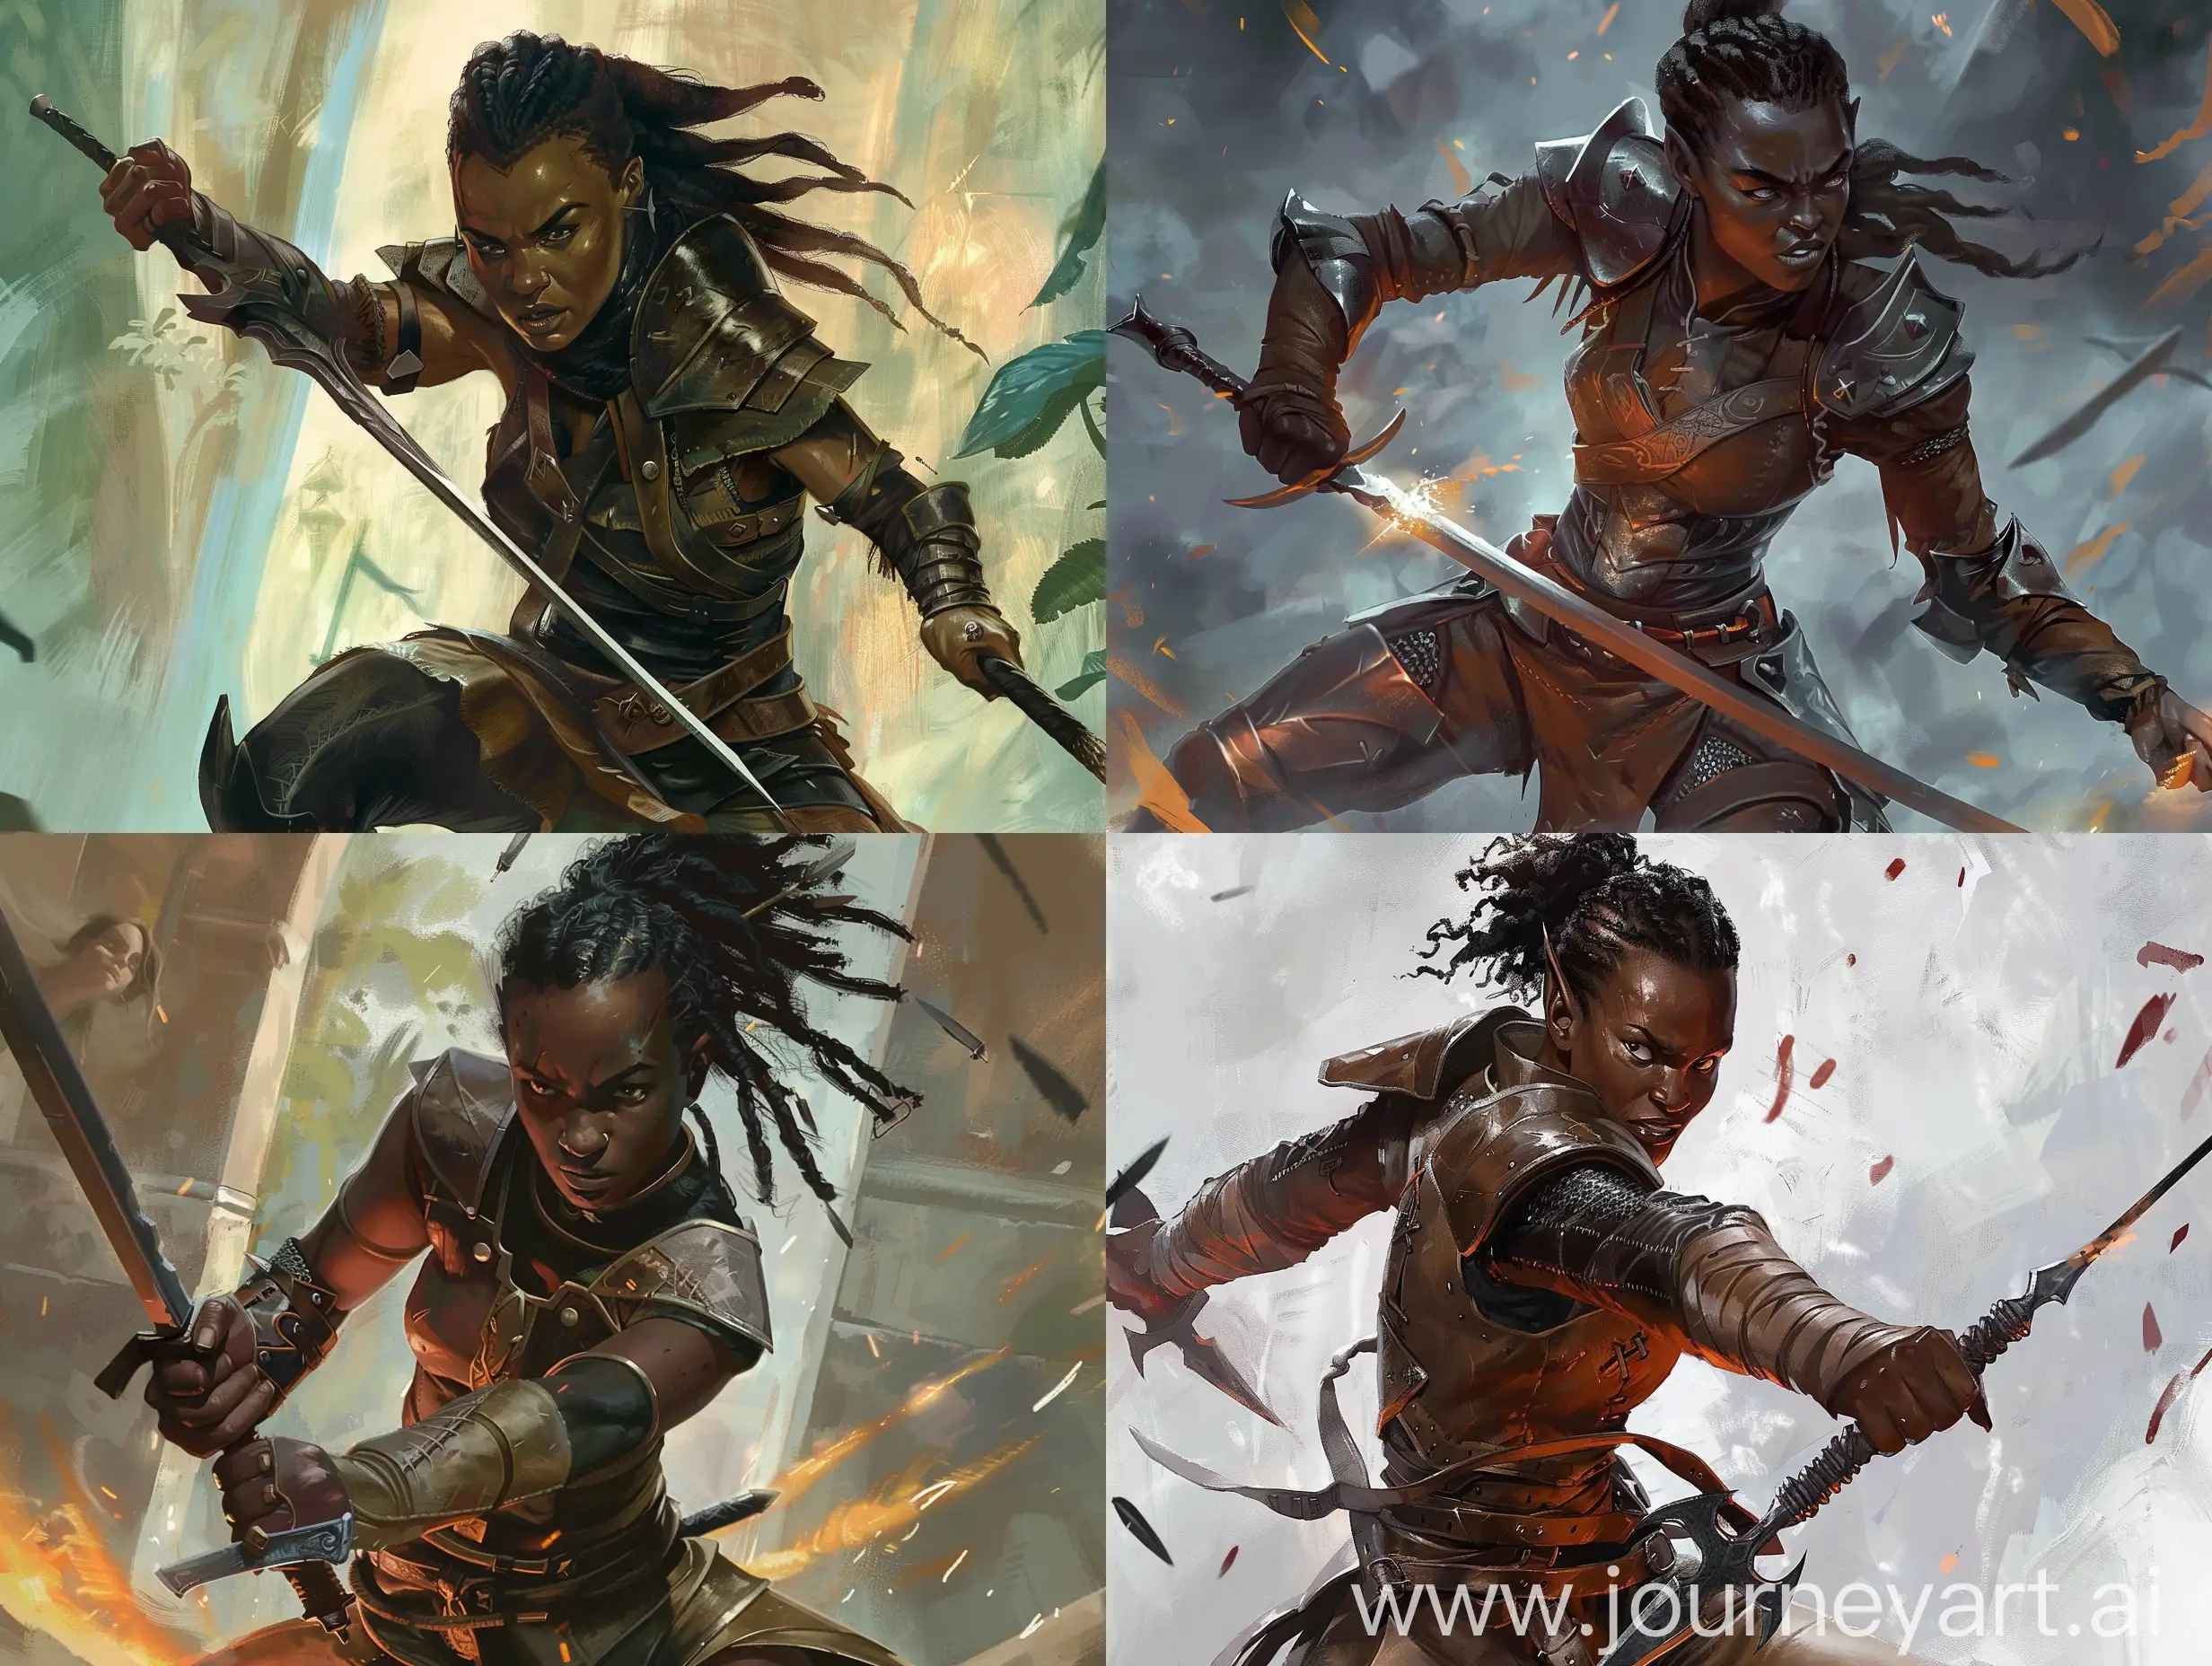 Dynamic-DarkSkinned-DD-Female-Warrior-in-Illustrative-Glaive-Battle